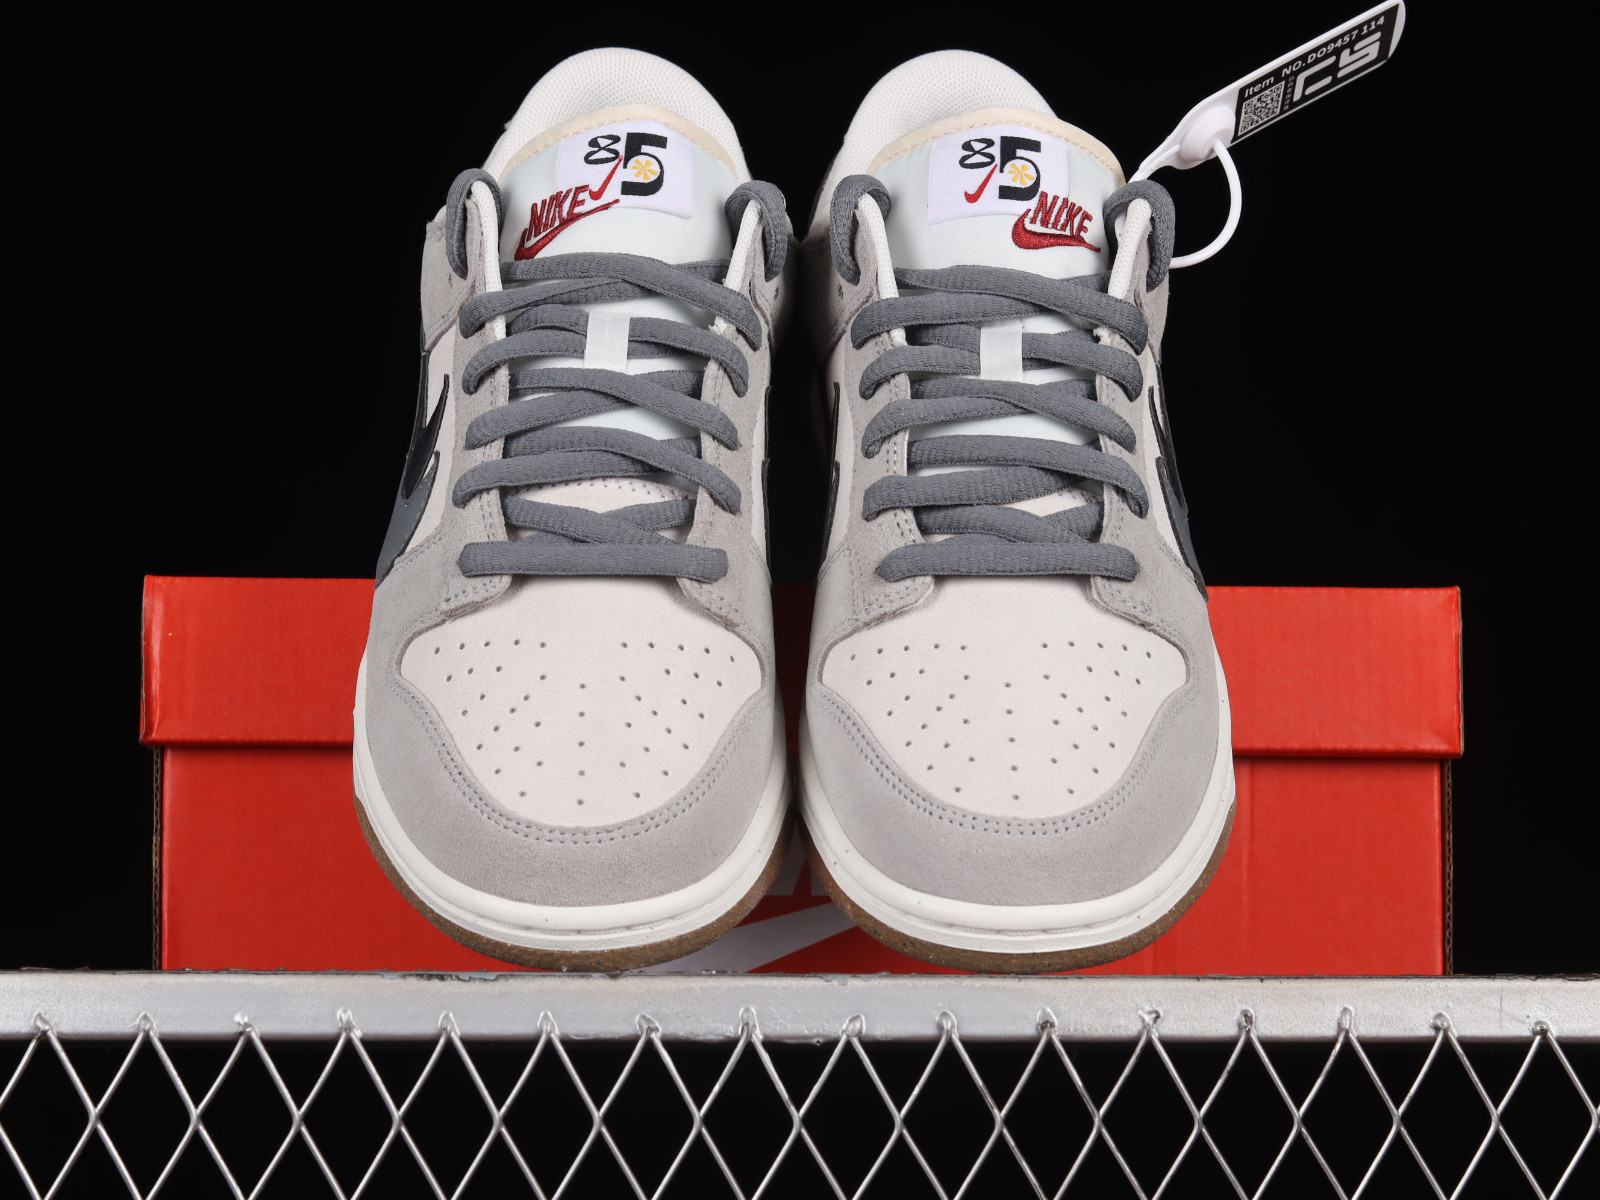 Nike SB Dunk friday Low 85 Light Grey Black DO9457 nike jordan slides youth size - 114 - MultiscaleconsultingShops